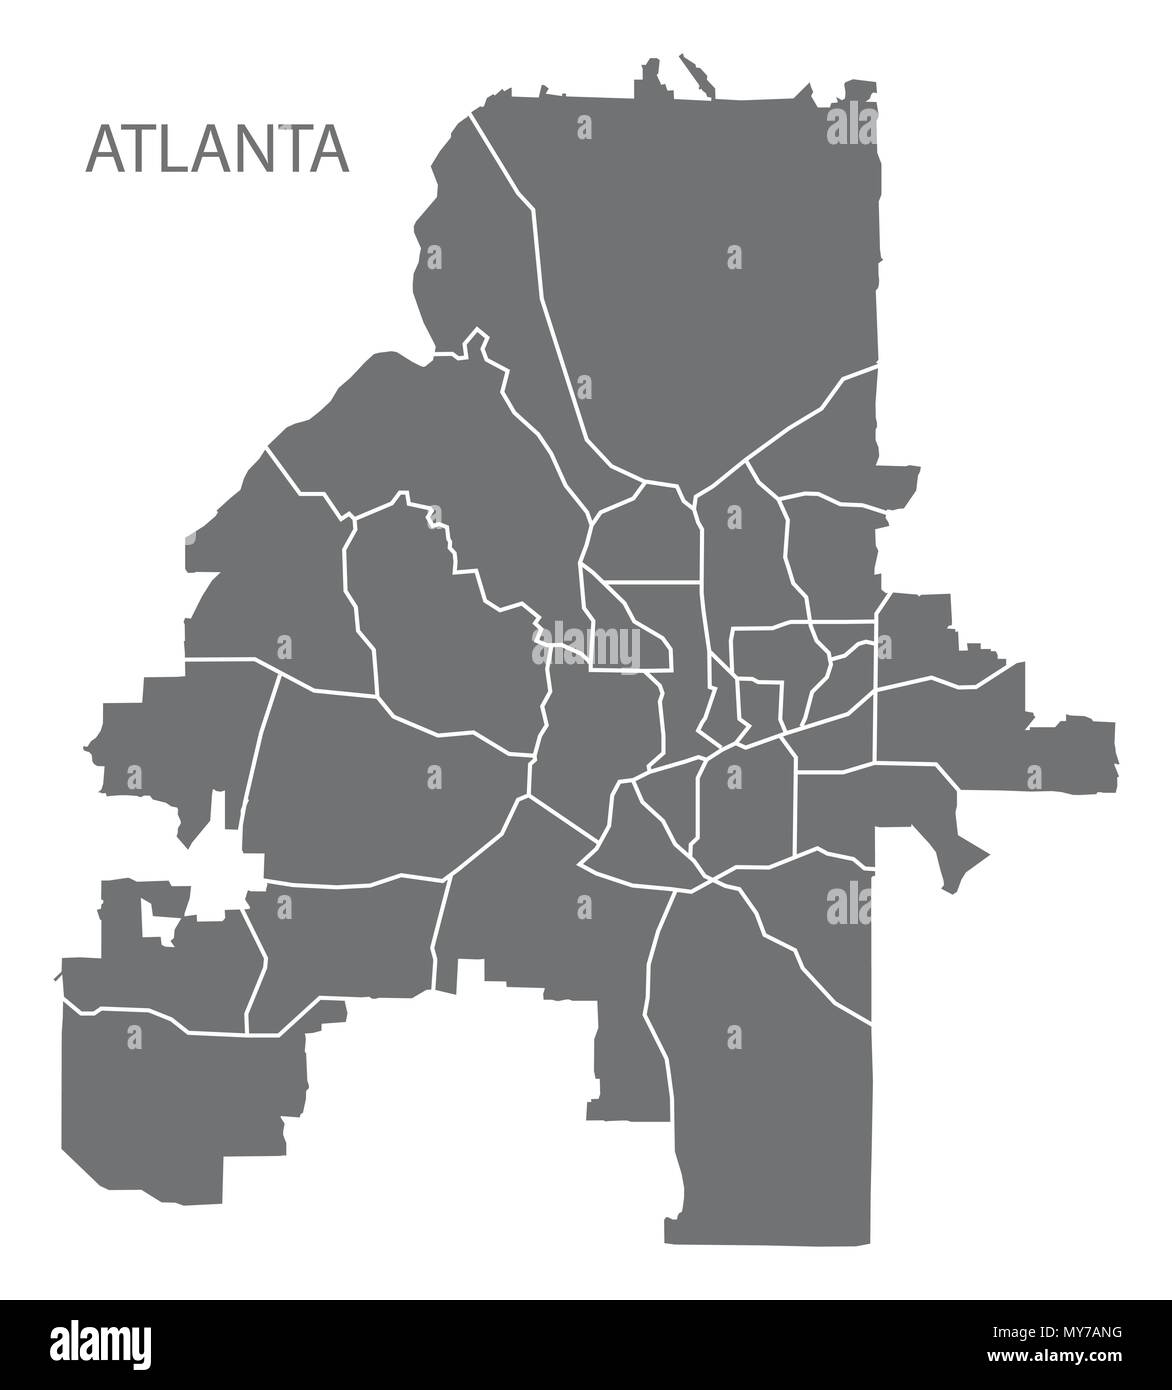 Atlanta Georgia Stadtplan mit nachbarschaften Grau Abbildung silhouette Form Stock Vektor